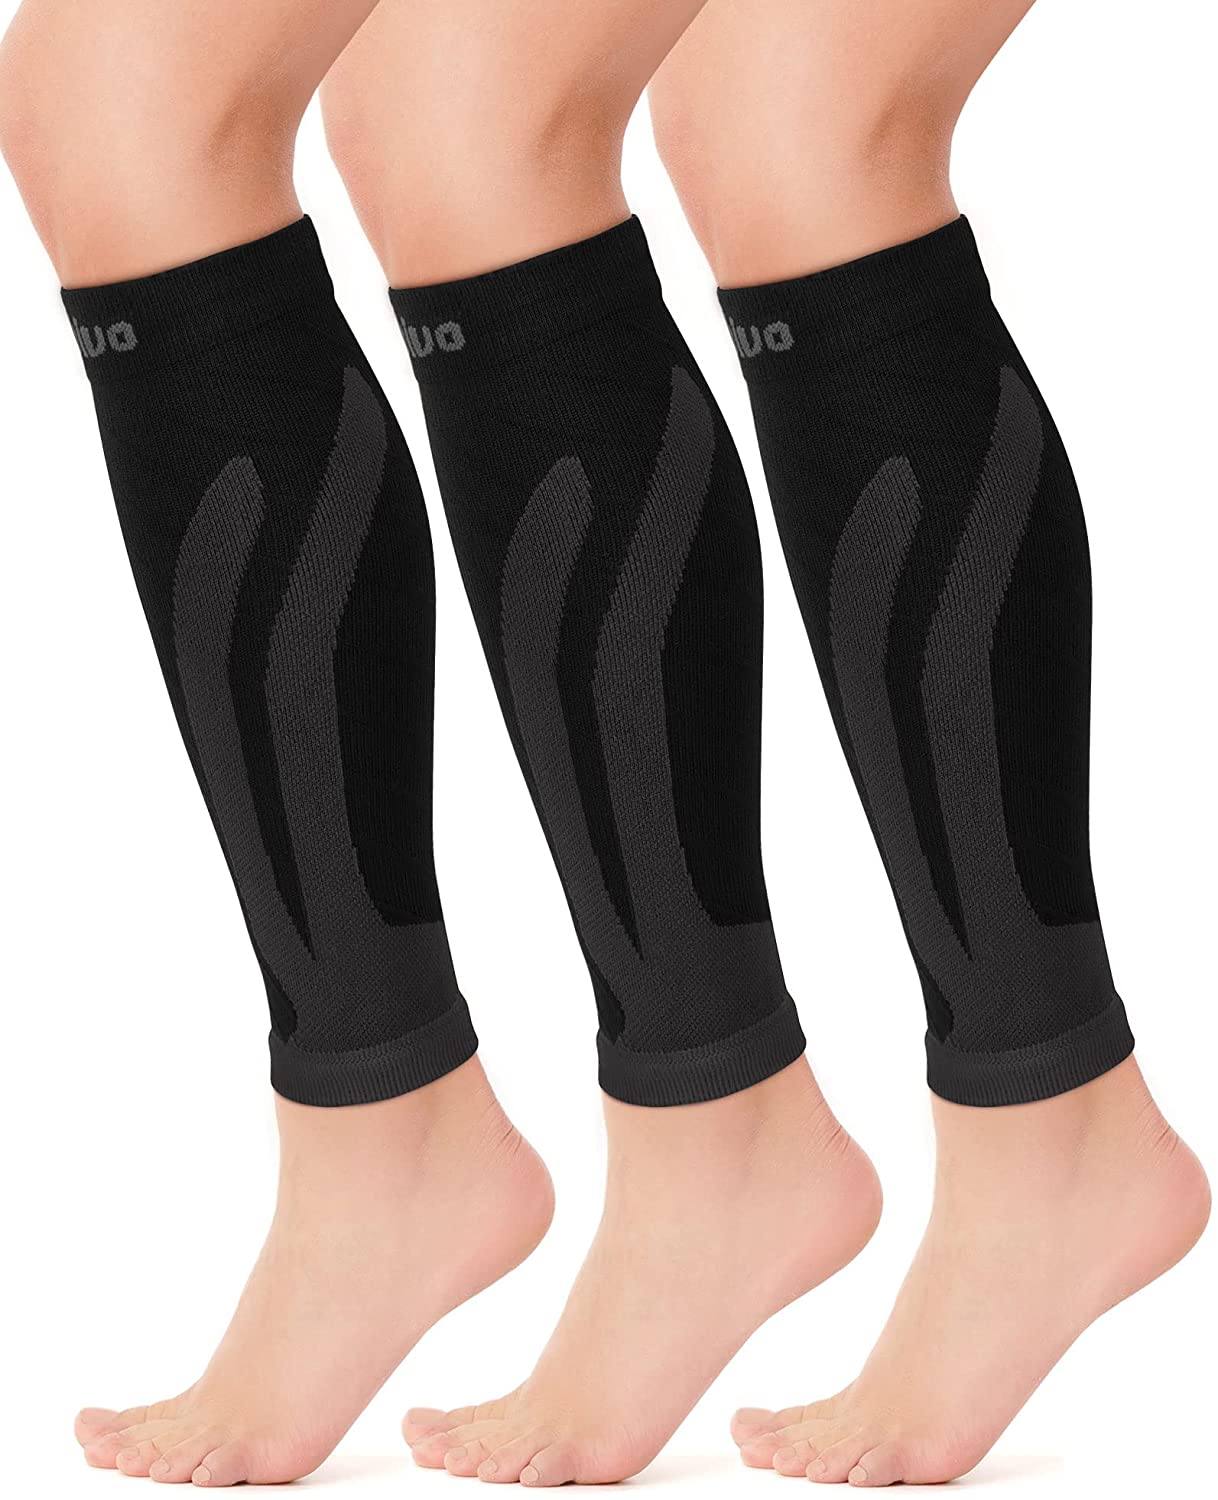 Calf Compression Sleeves, Relief Calf Pain, Calf Support Leg For Recovery, Varicose  Veins, Shin Splint, Running, Cycling, Sports Men Women 